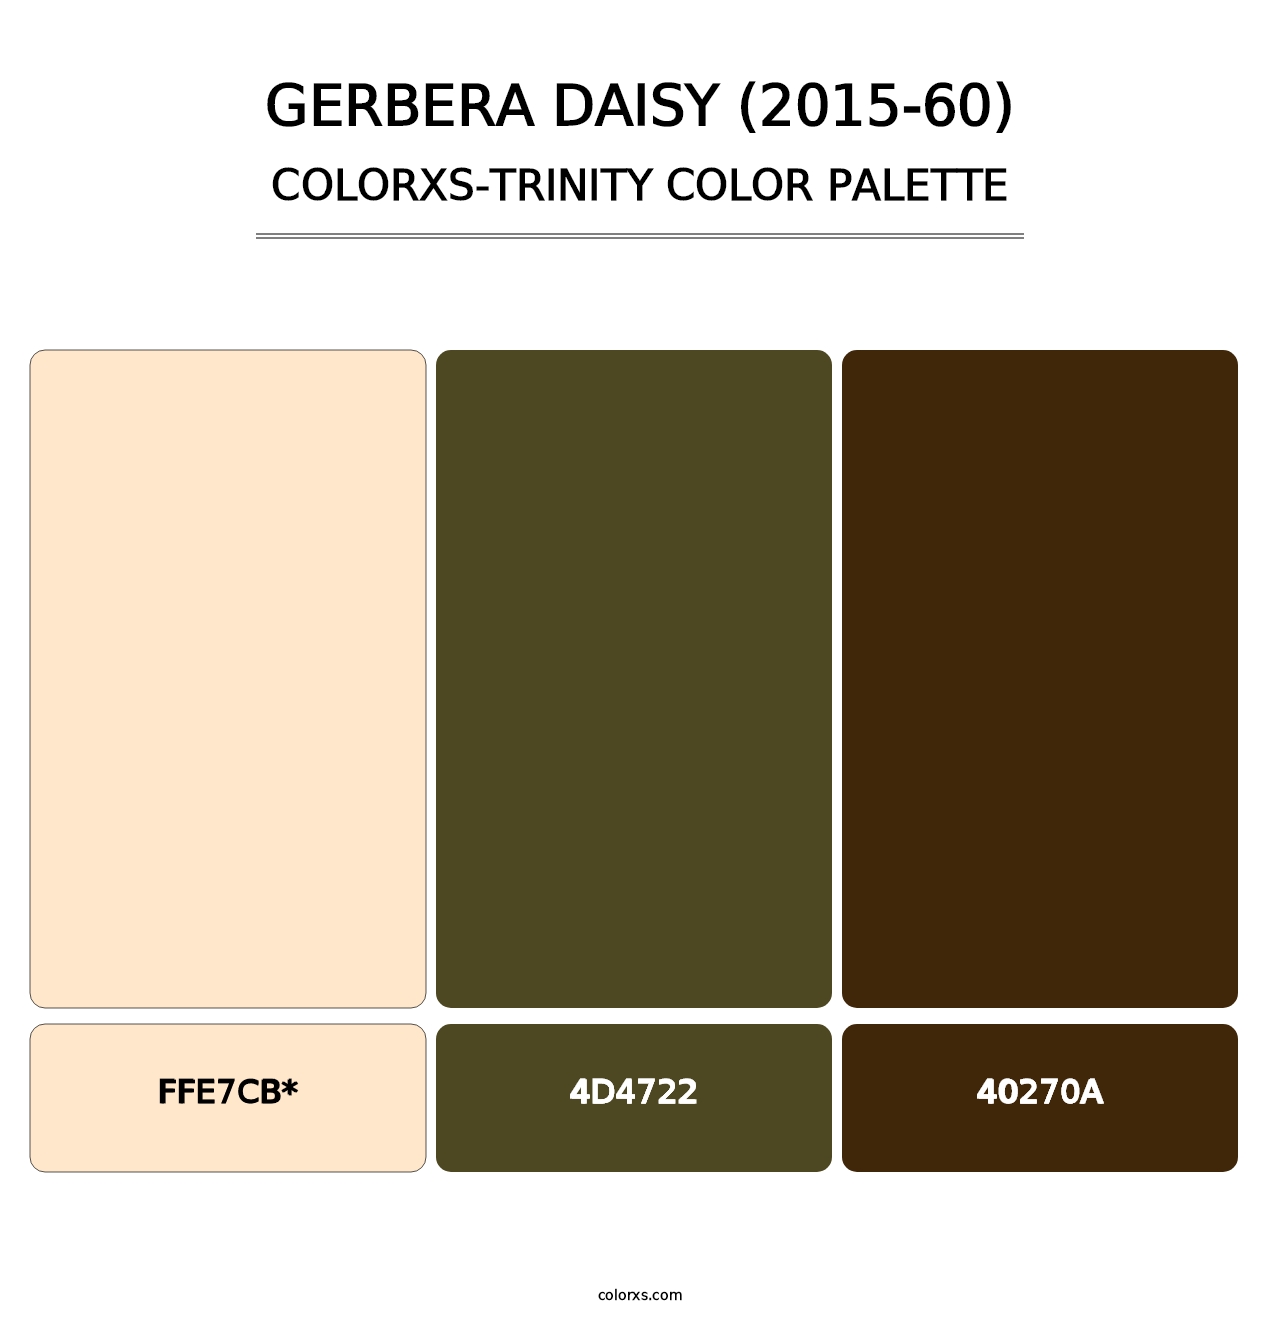 Gerbera Daisy (2015-60) - Colorxs Trinity Palette